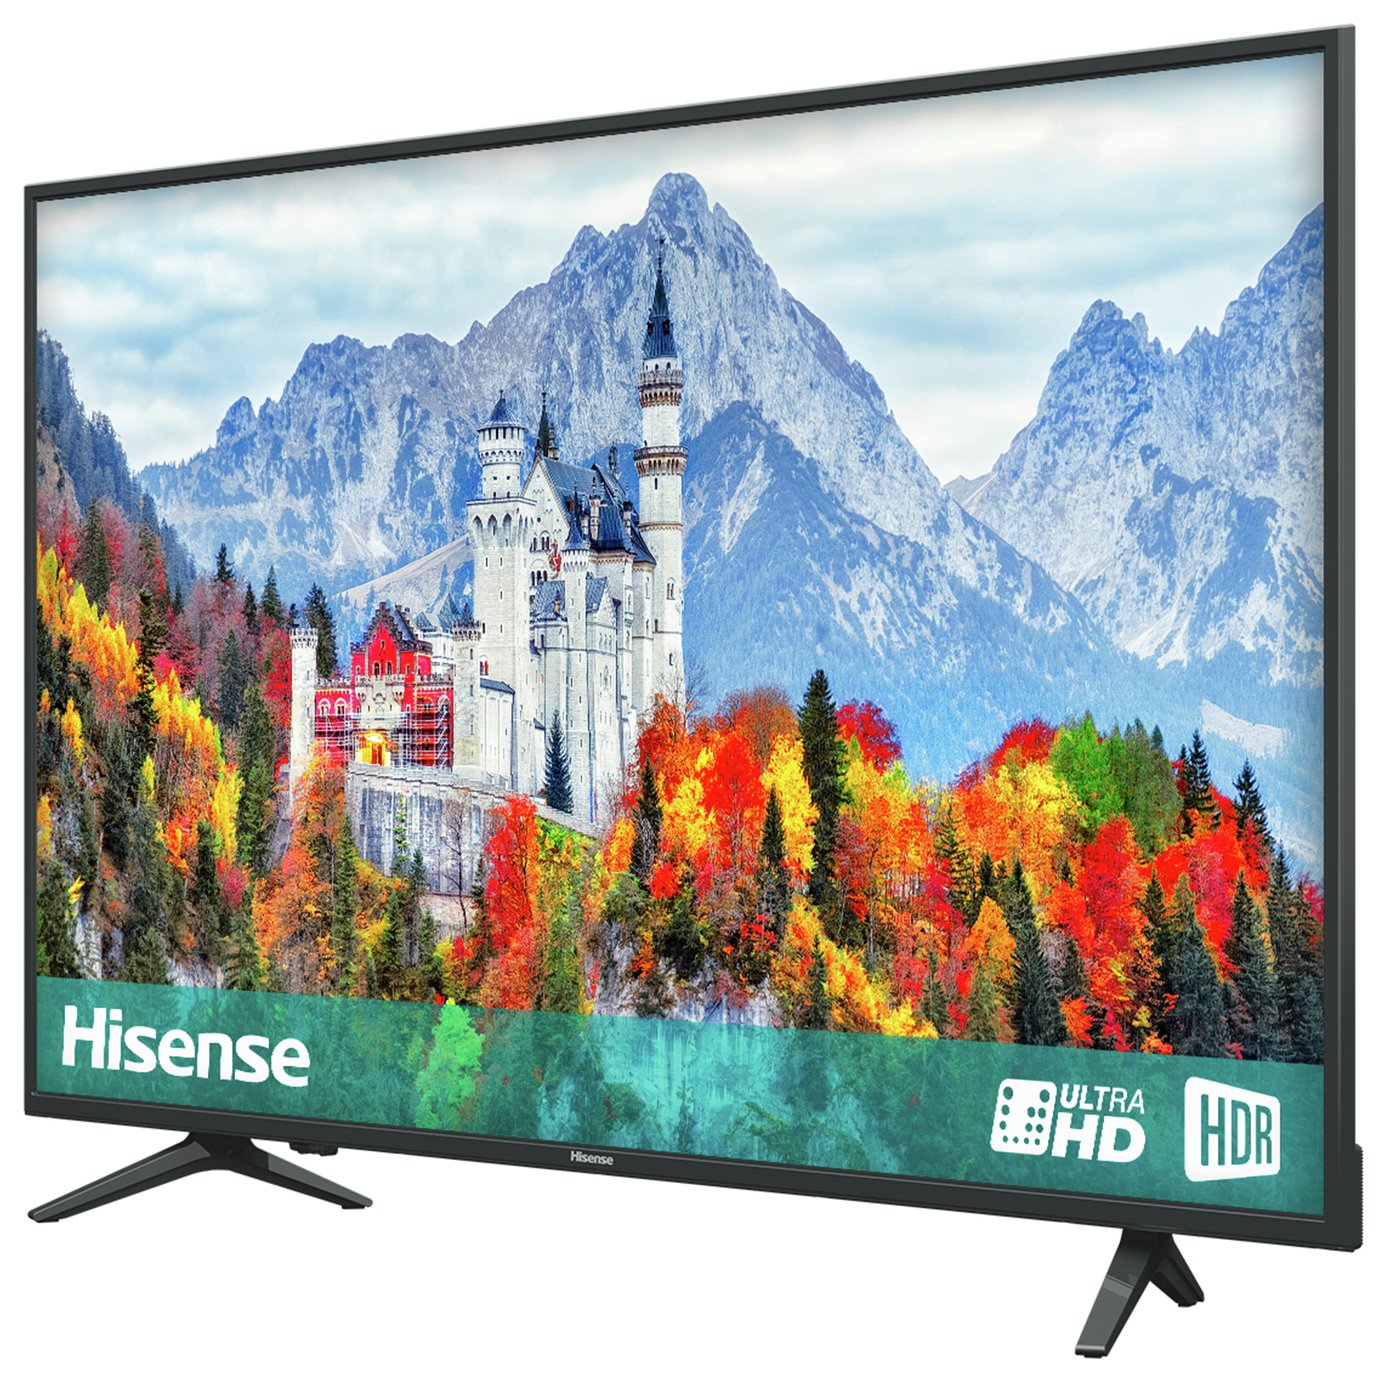 Hisense 50 Inch H50A6250UK Smart 4K HDR LED TV Review